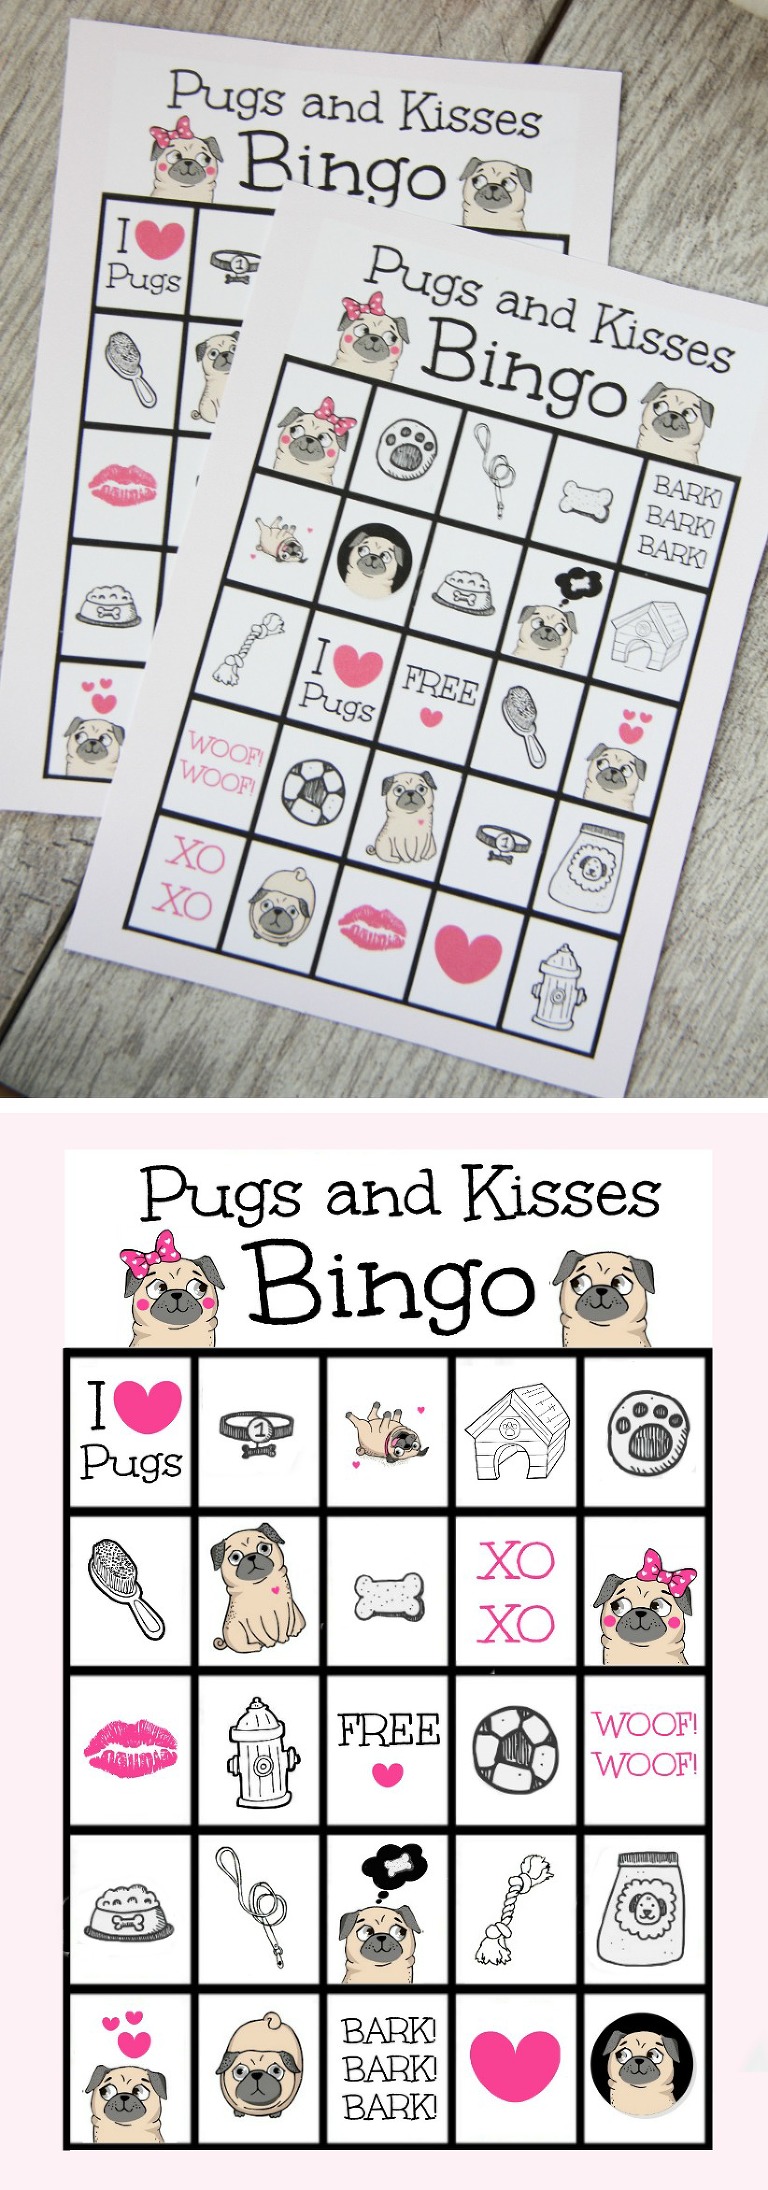 pugs-and-kisses-bingo-game-with-free-printables